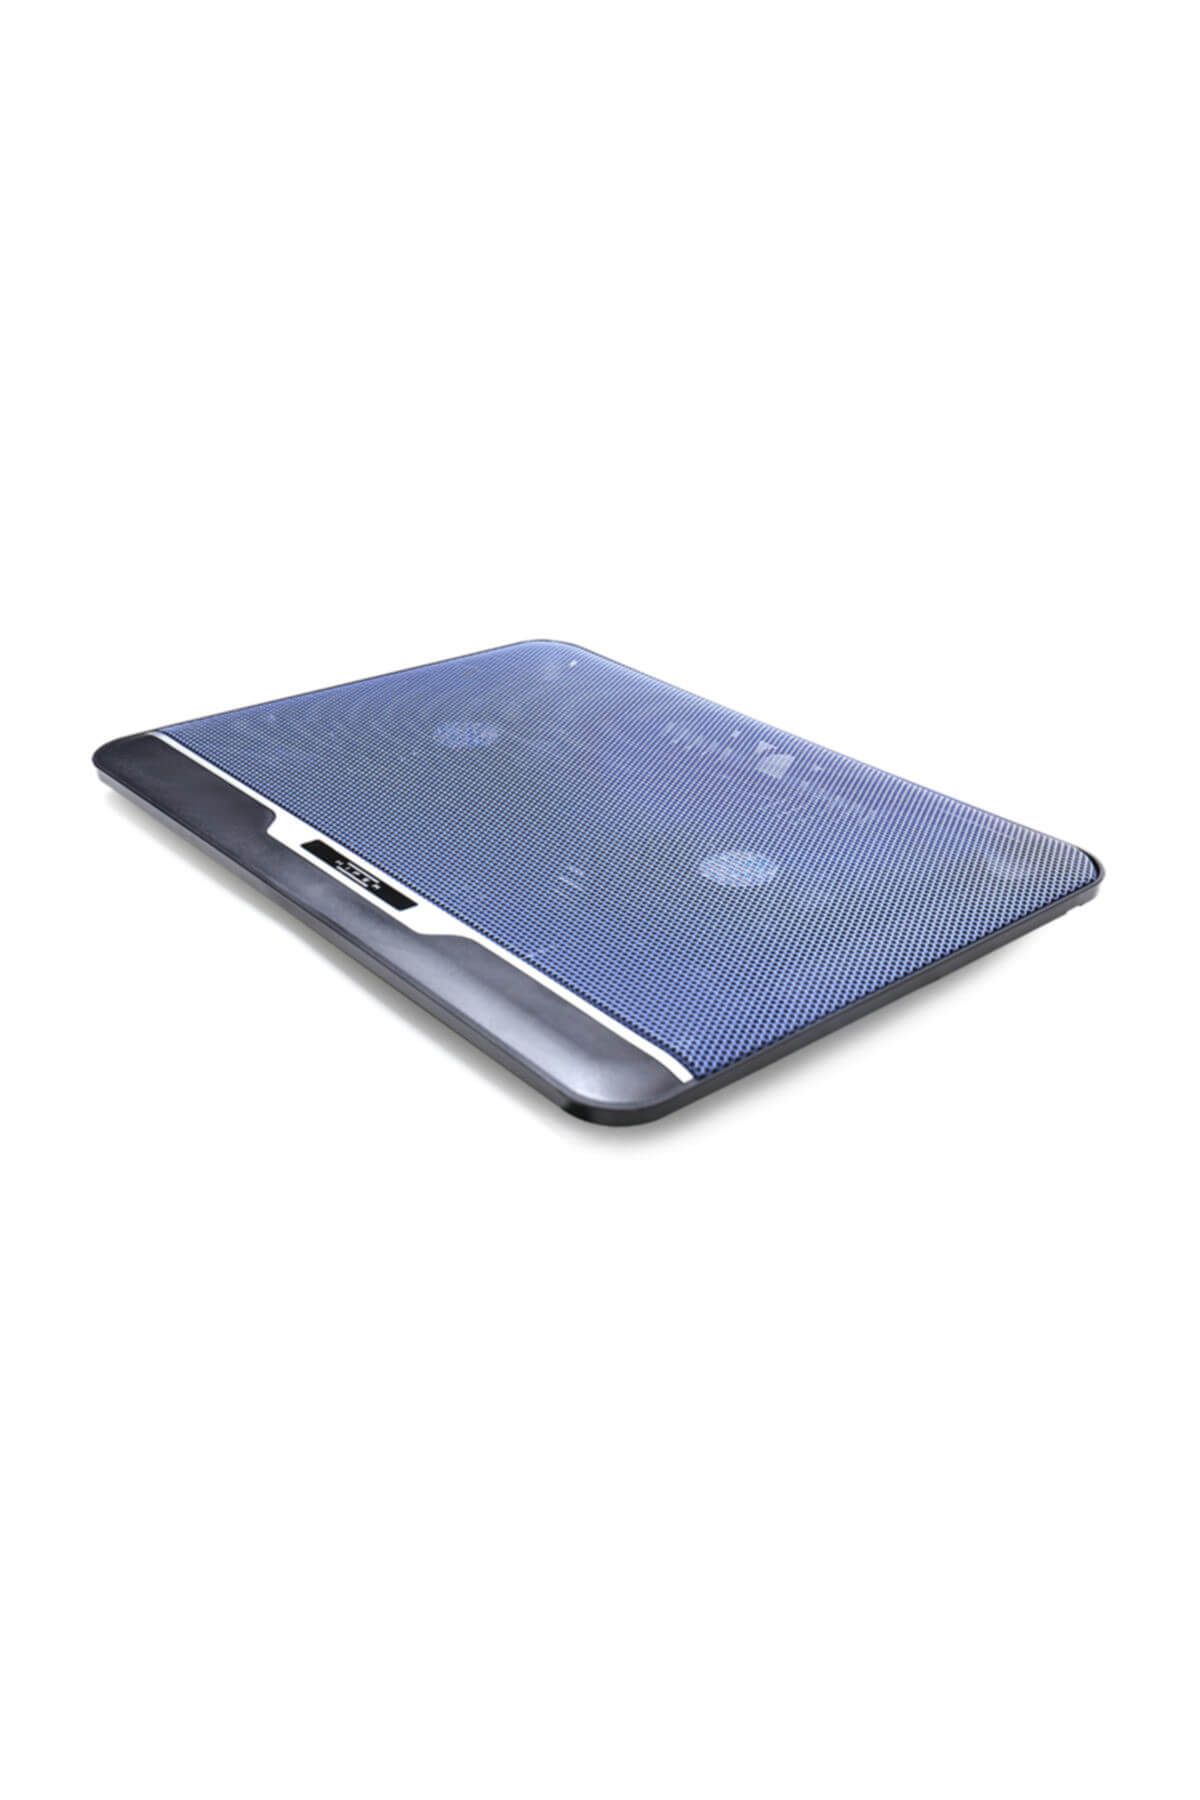 Hiper Orjinal NC-1700M Çift Fanlı Mavi Notebook Soğutucu